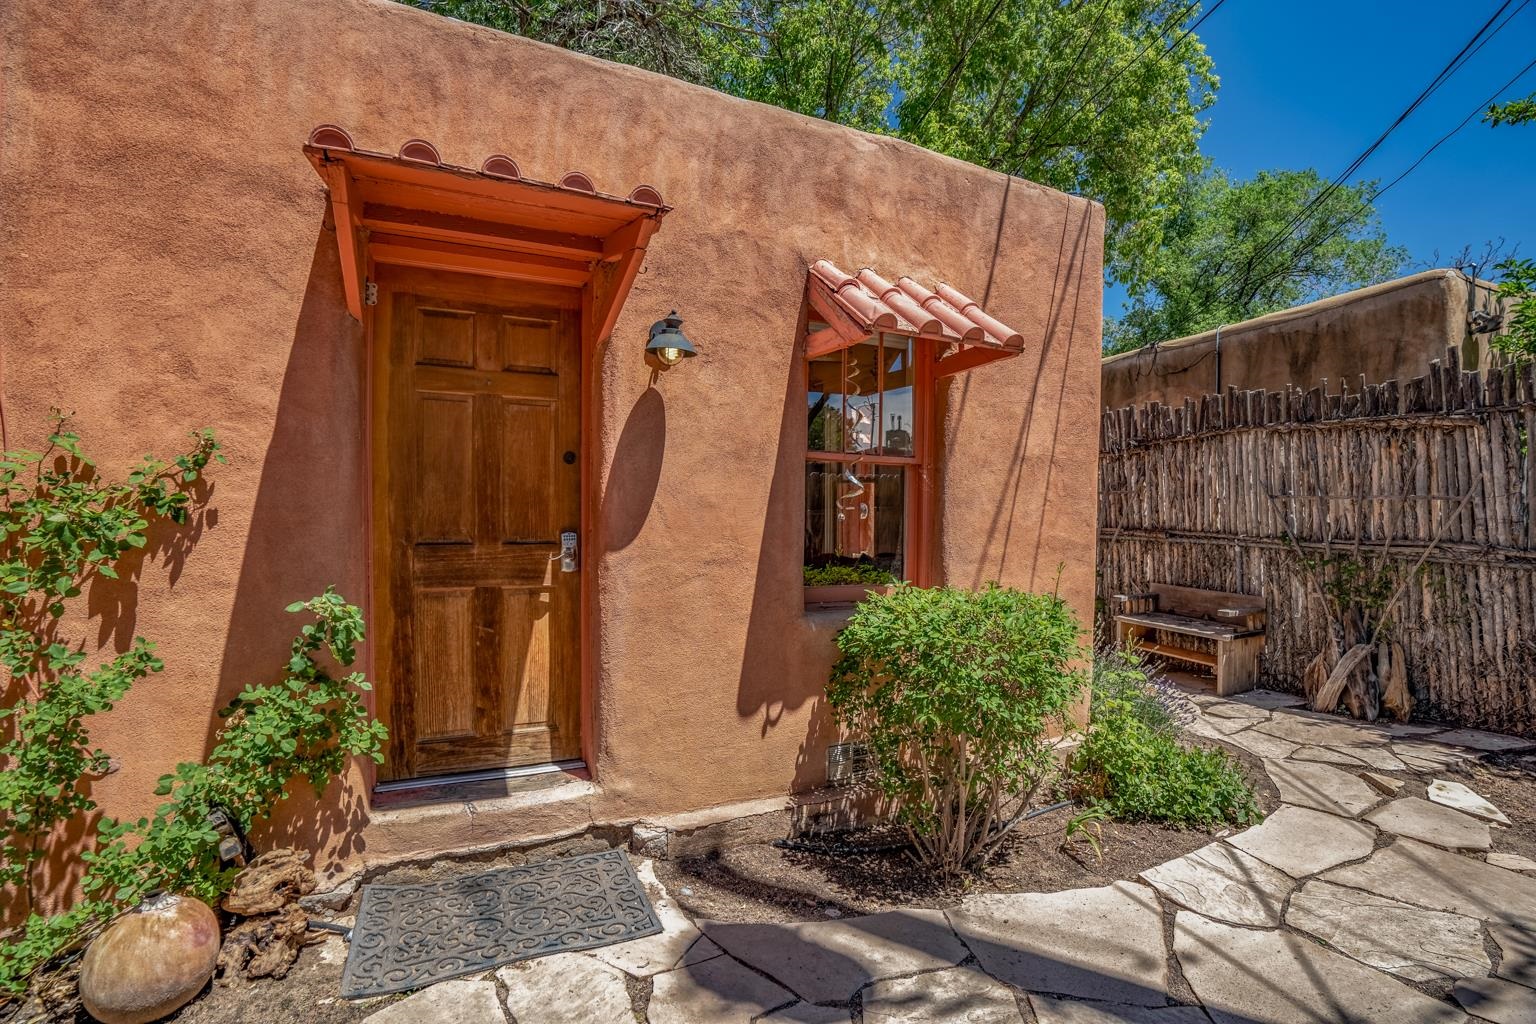 147 Duran, Santa Fe, New Mexico 87501, 2 Bedrooms Bedrooms, ,1 BathroomBathrooms,Residential,For Sale,147 Duran,202202407